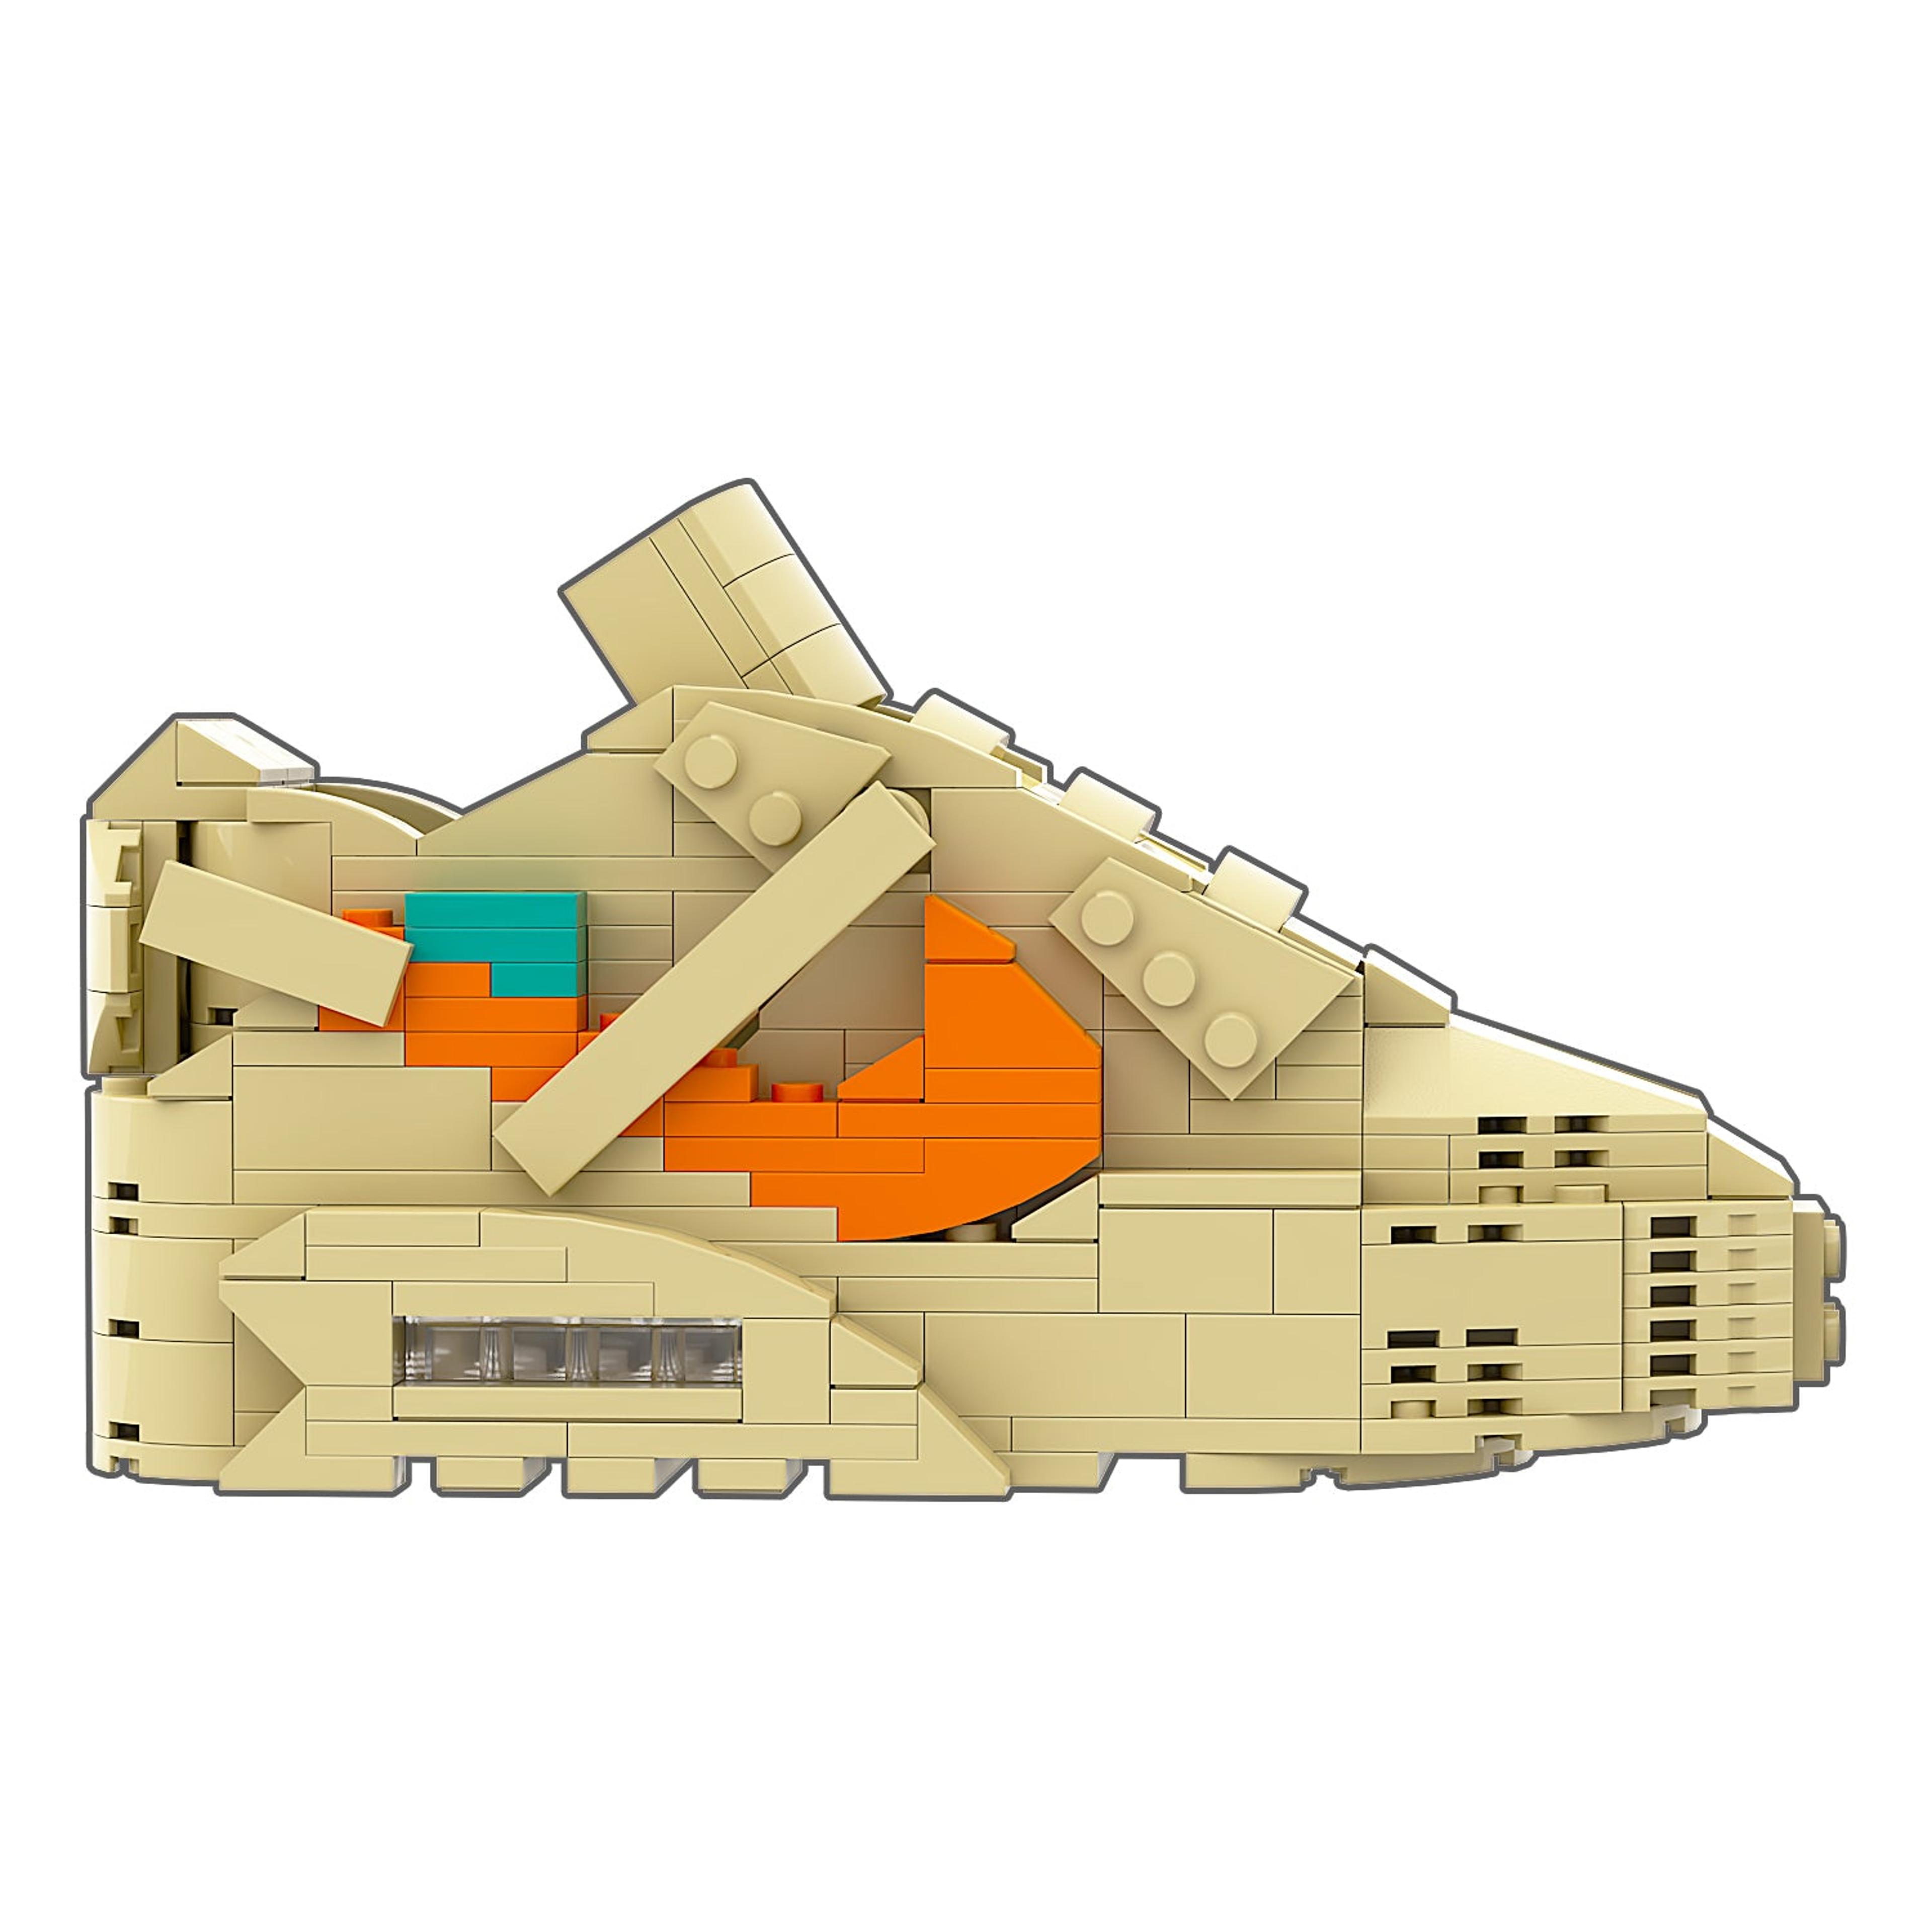 Alternate View 4 of REGULAR Air Max 90 "Desert Ore" Sneaker Bricks with Mini Figure